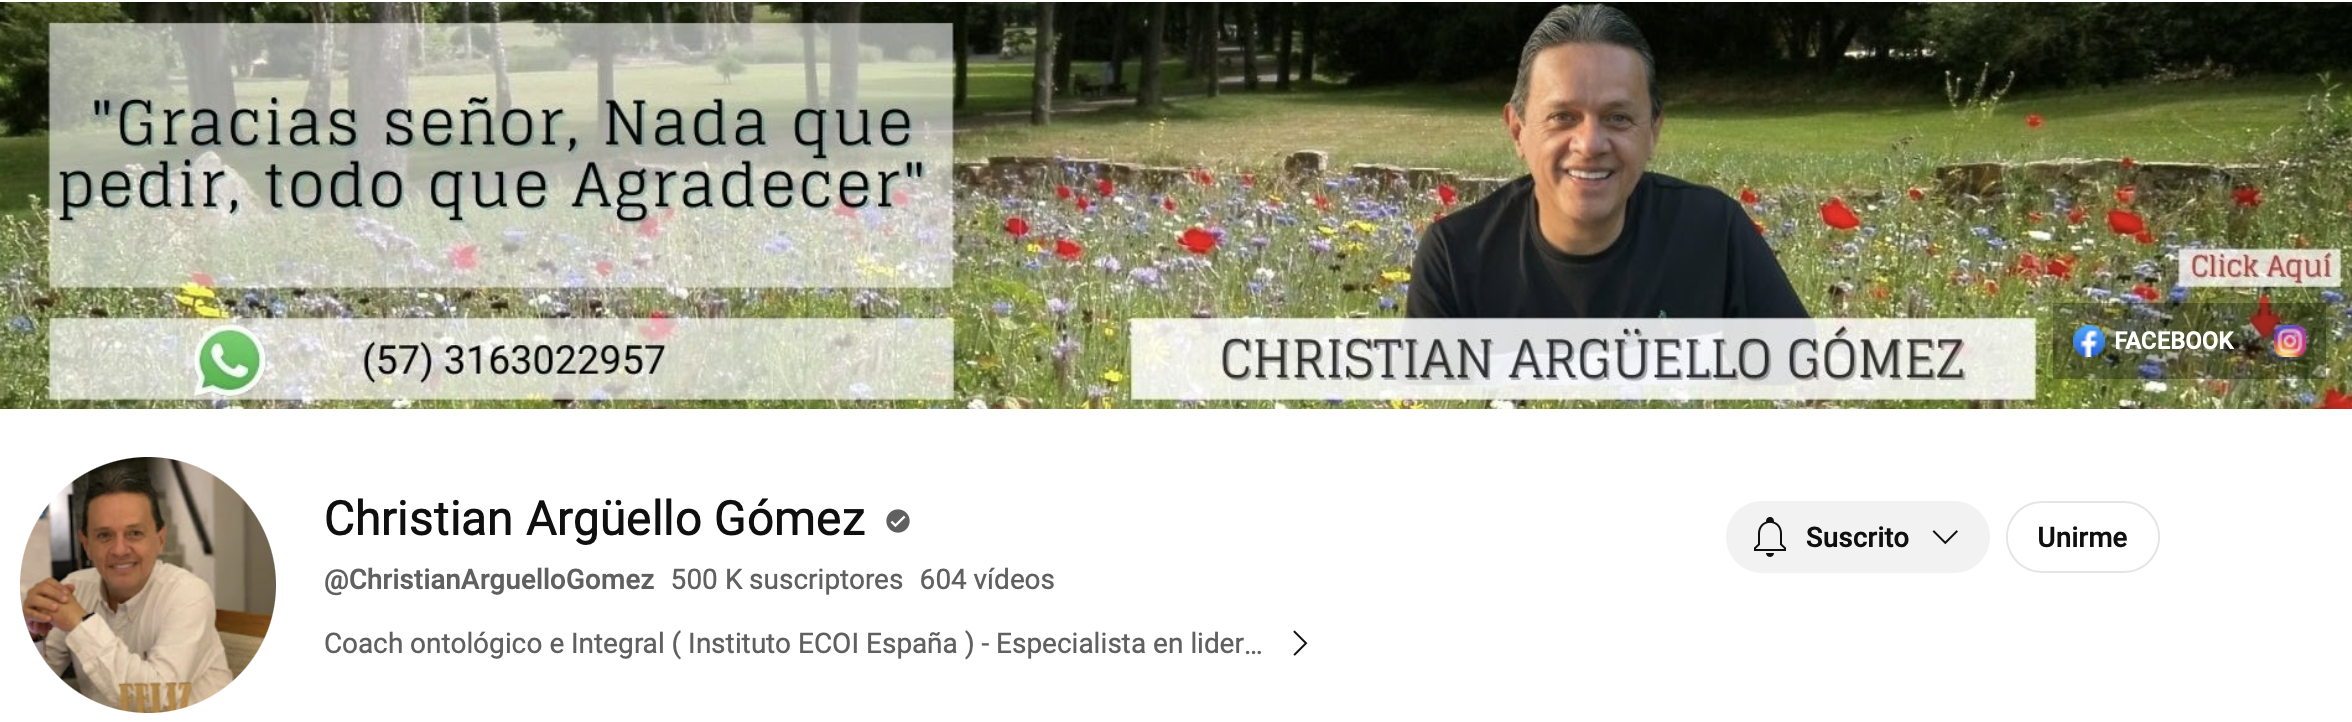 Christian-Arguello